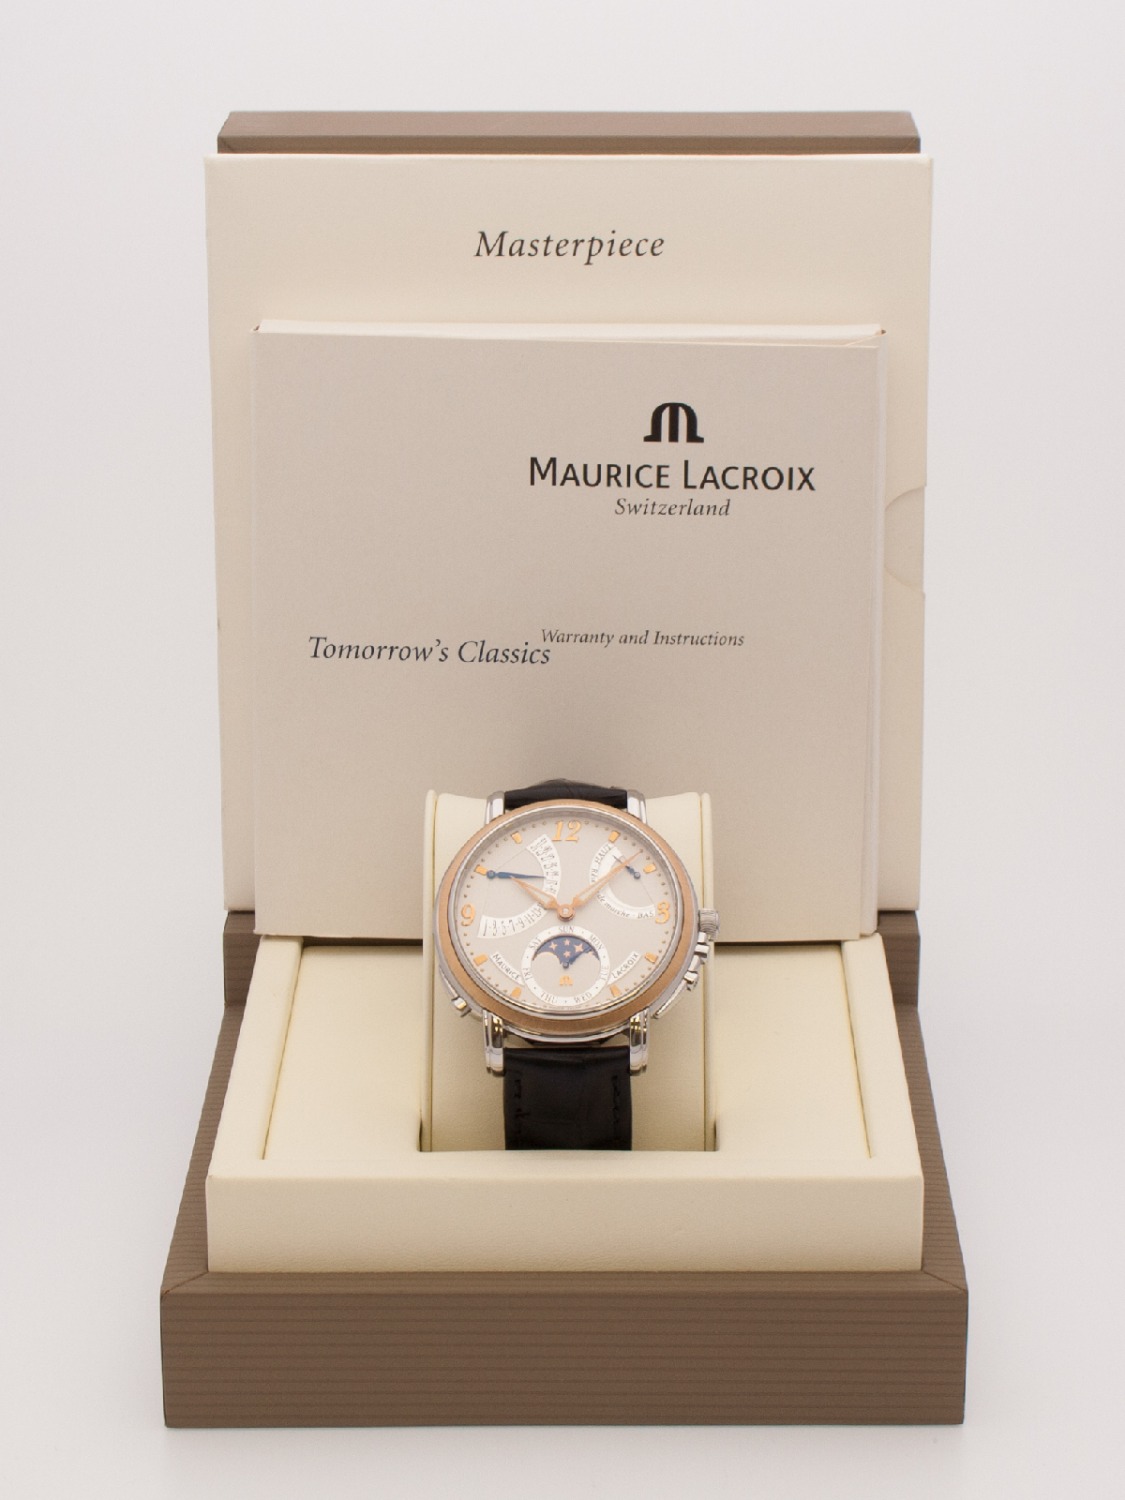 Maurice Lacroix Masterpiece Lune Retrograde watch, silver